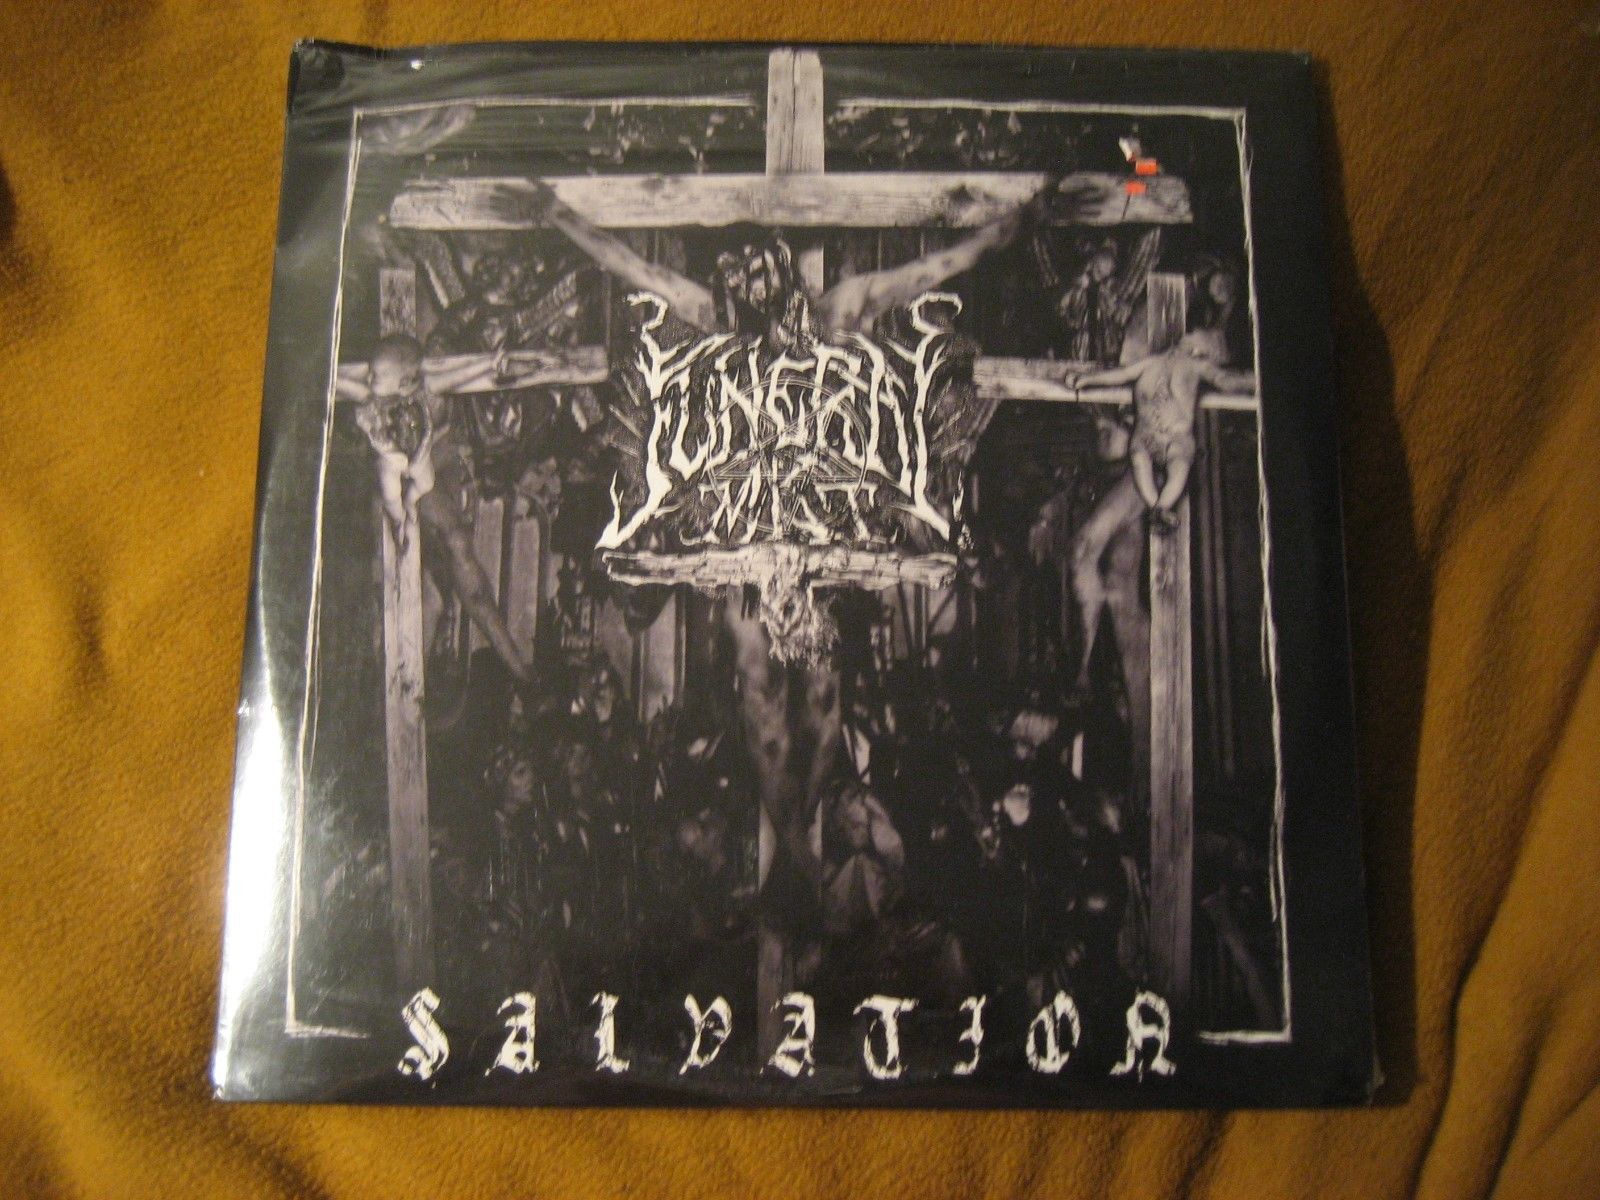 Funeral Mist Salvation Orig Vinyl 2-lp Gorgoroth Marduk - Funeral Mist Salvation Cover - HD Wallpaper 